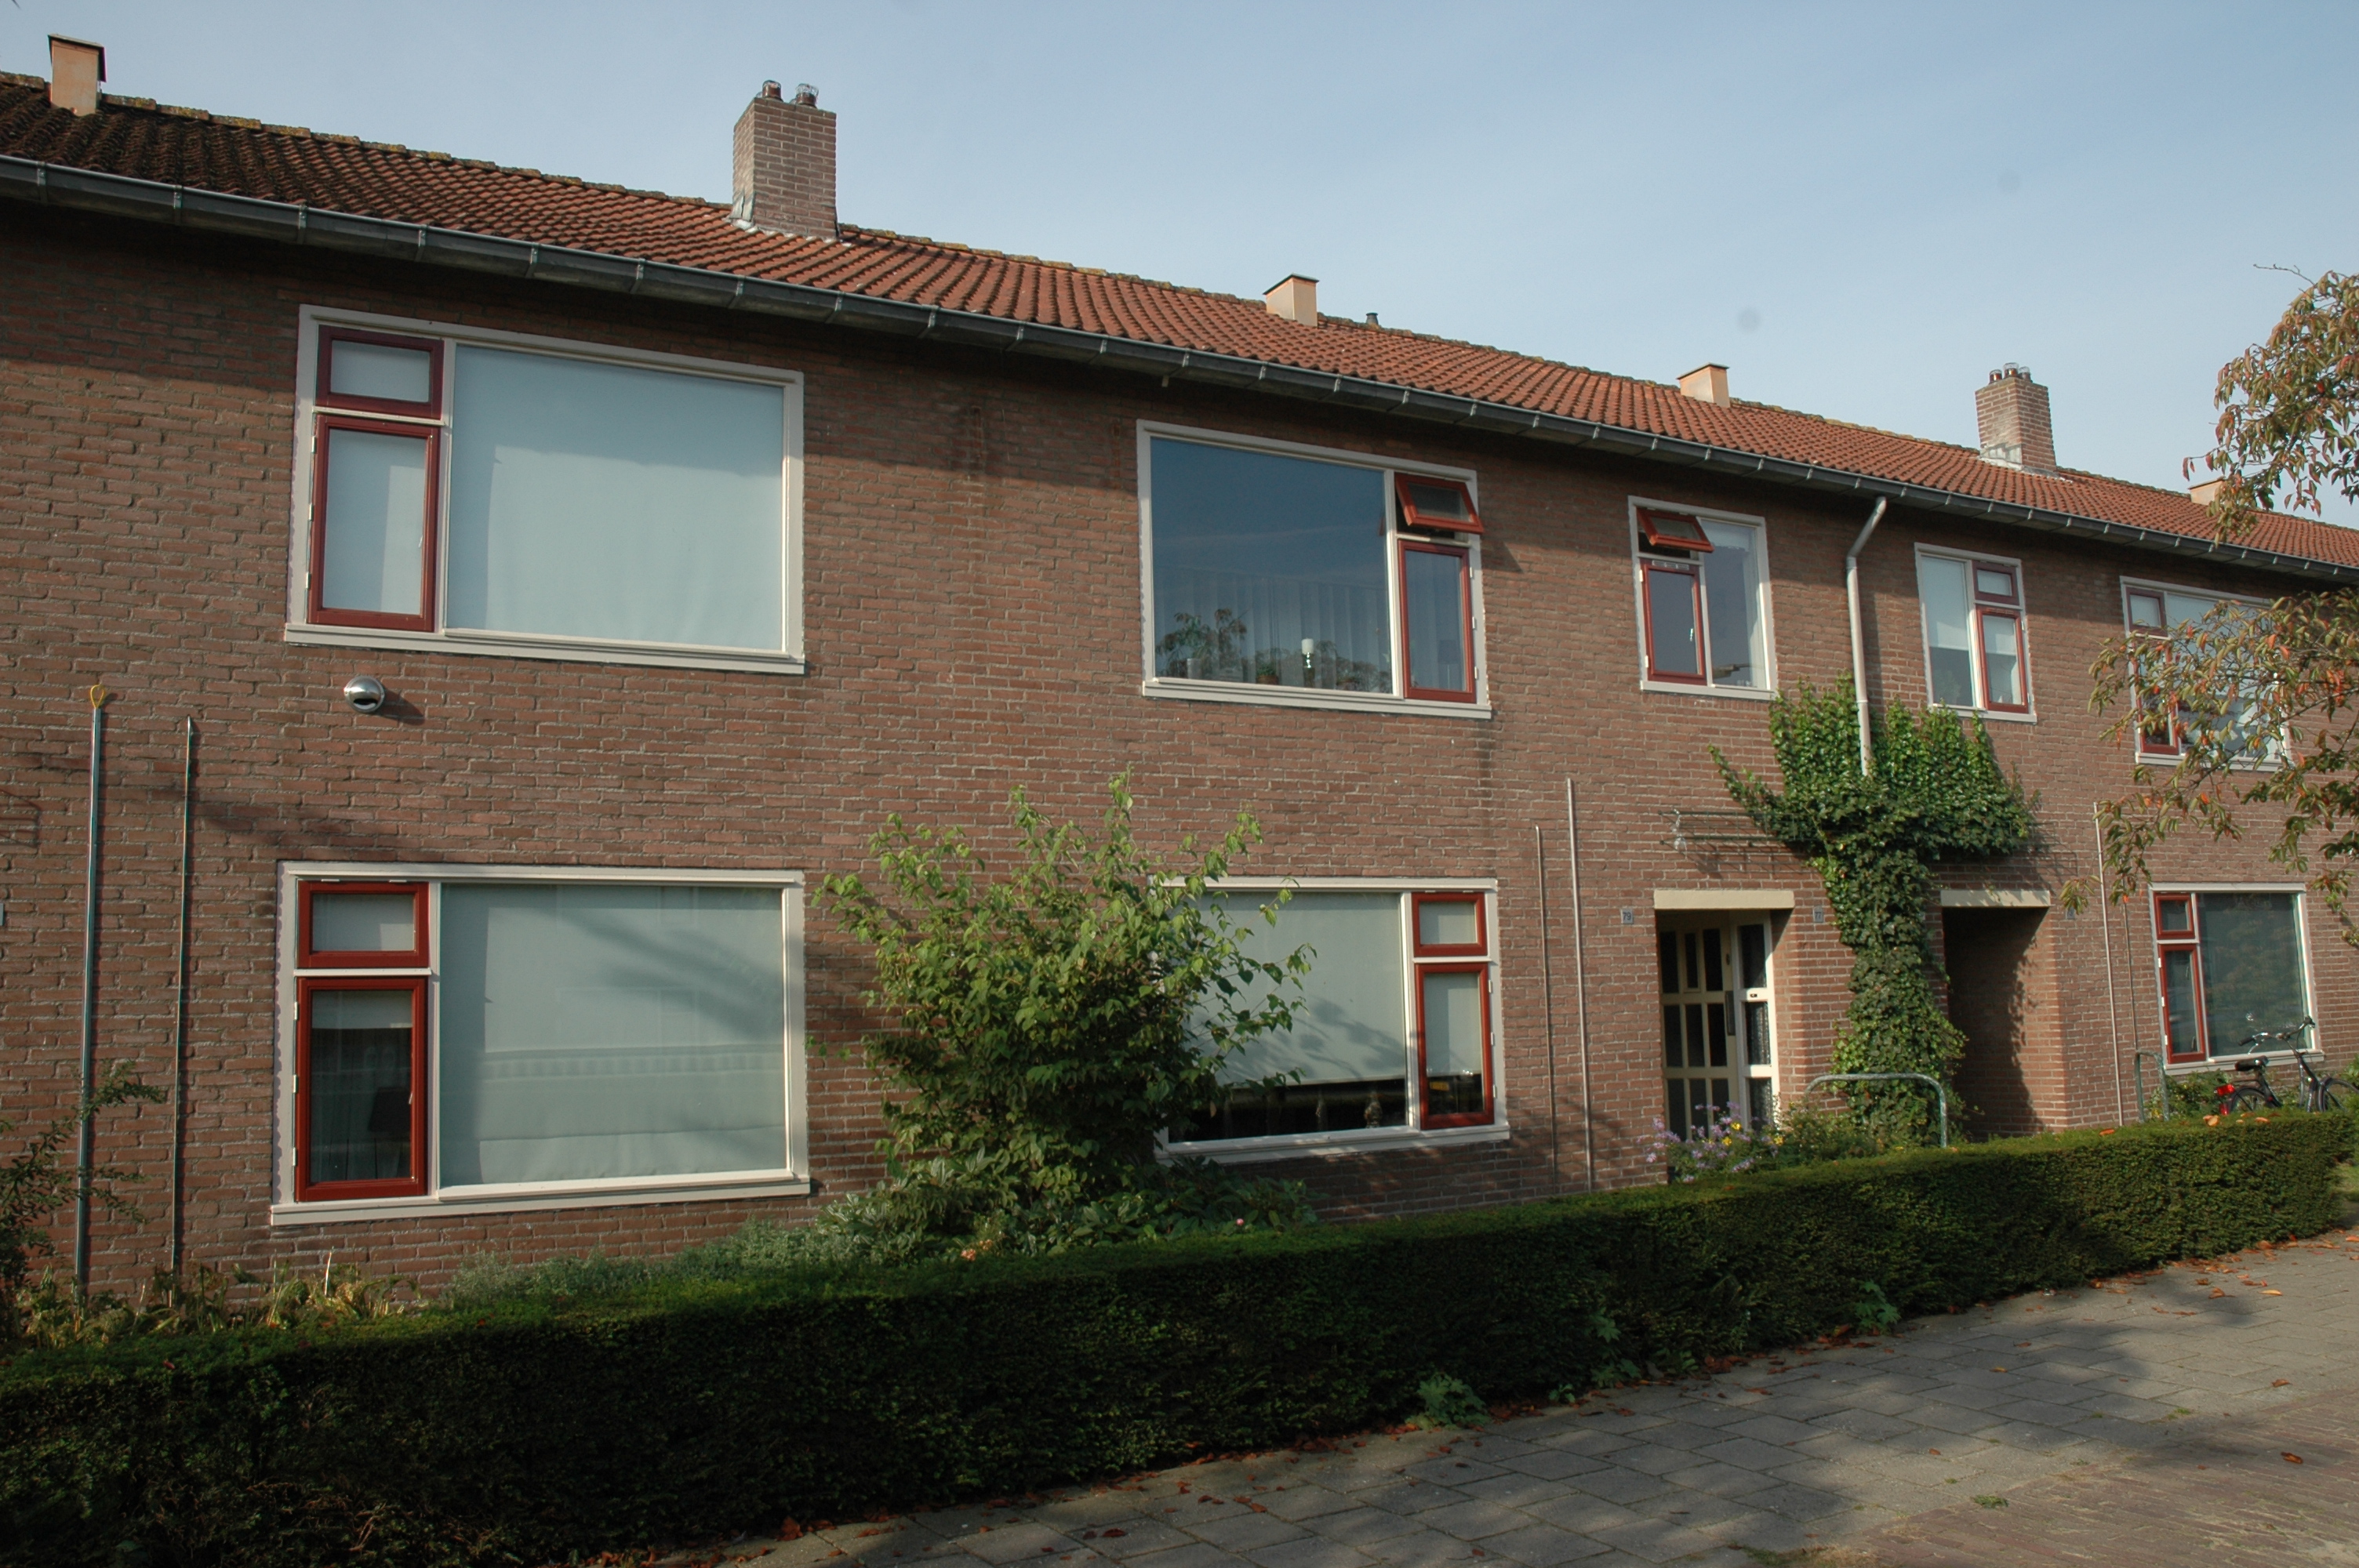 Deldensestraat 71, 7601 RX Almelo, Nederland